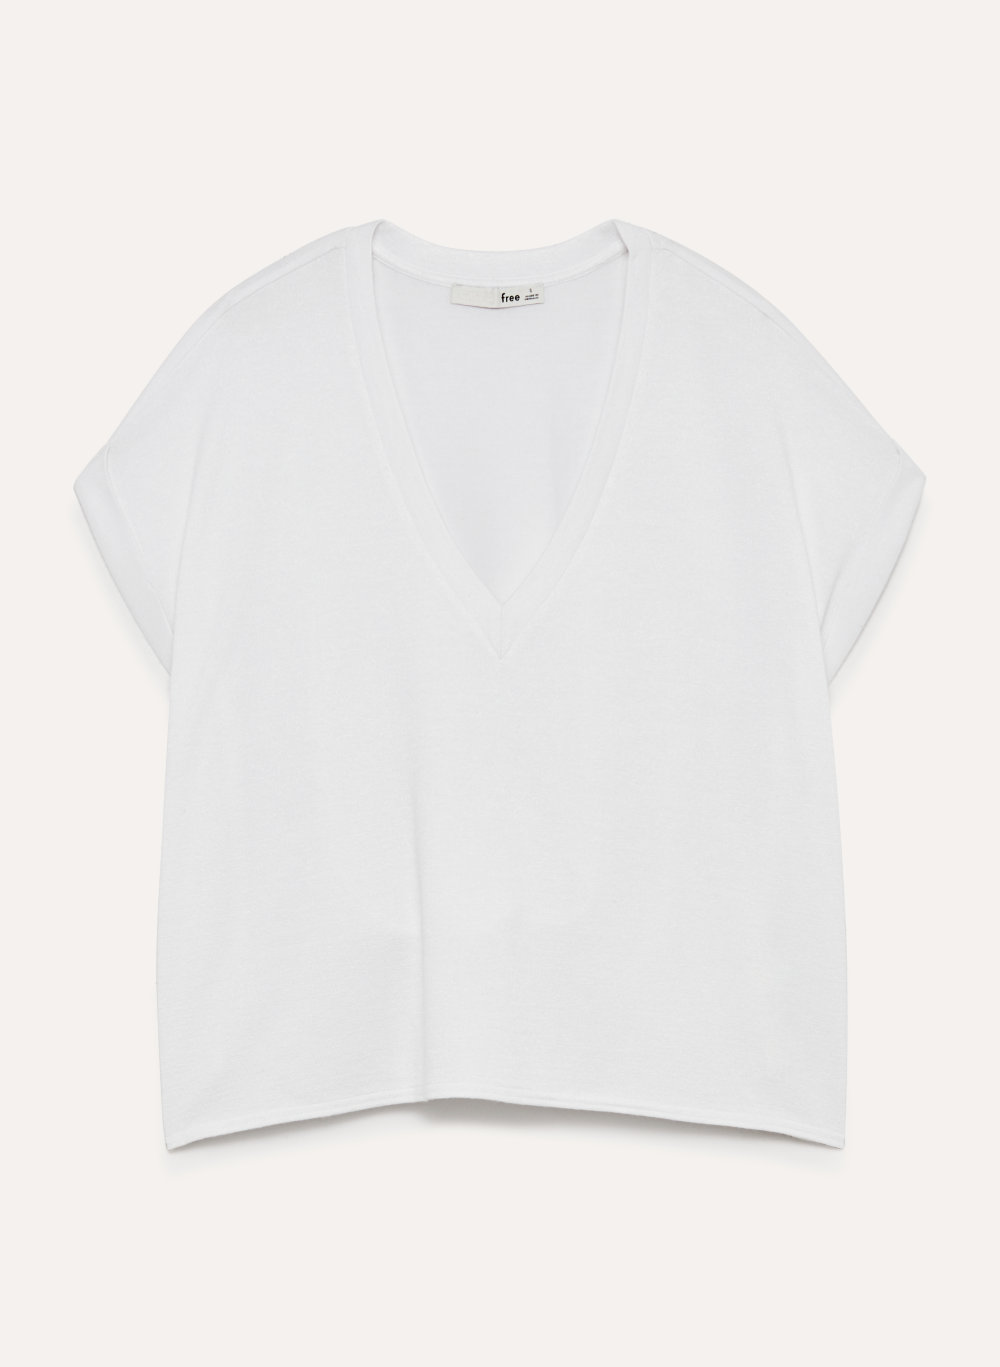 Aritzia white tee | Shirts, Feminine drapes, T shirt